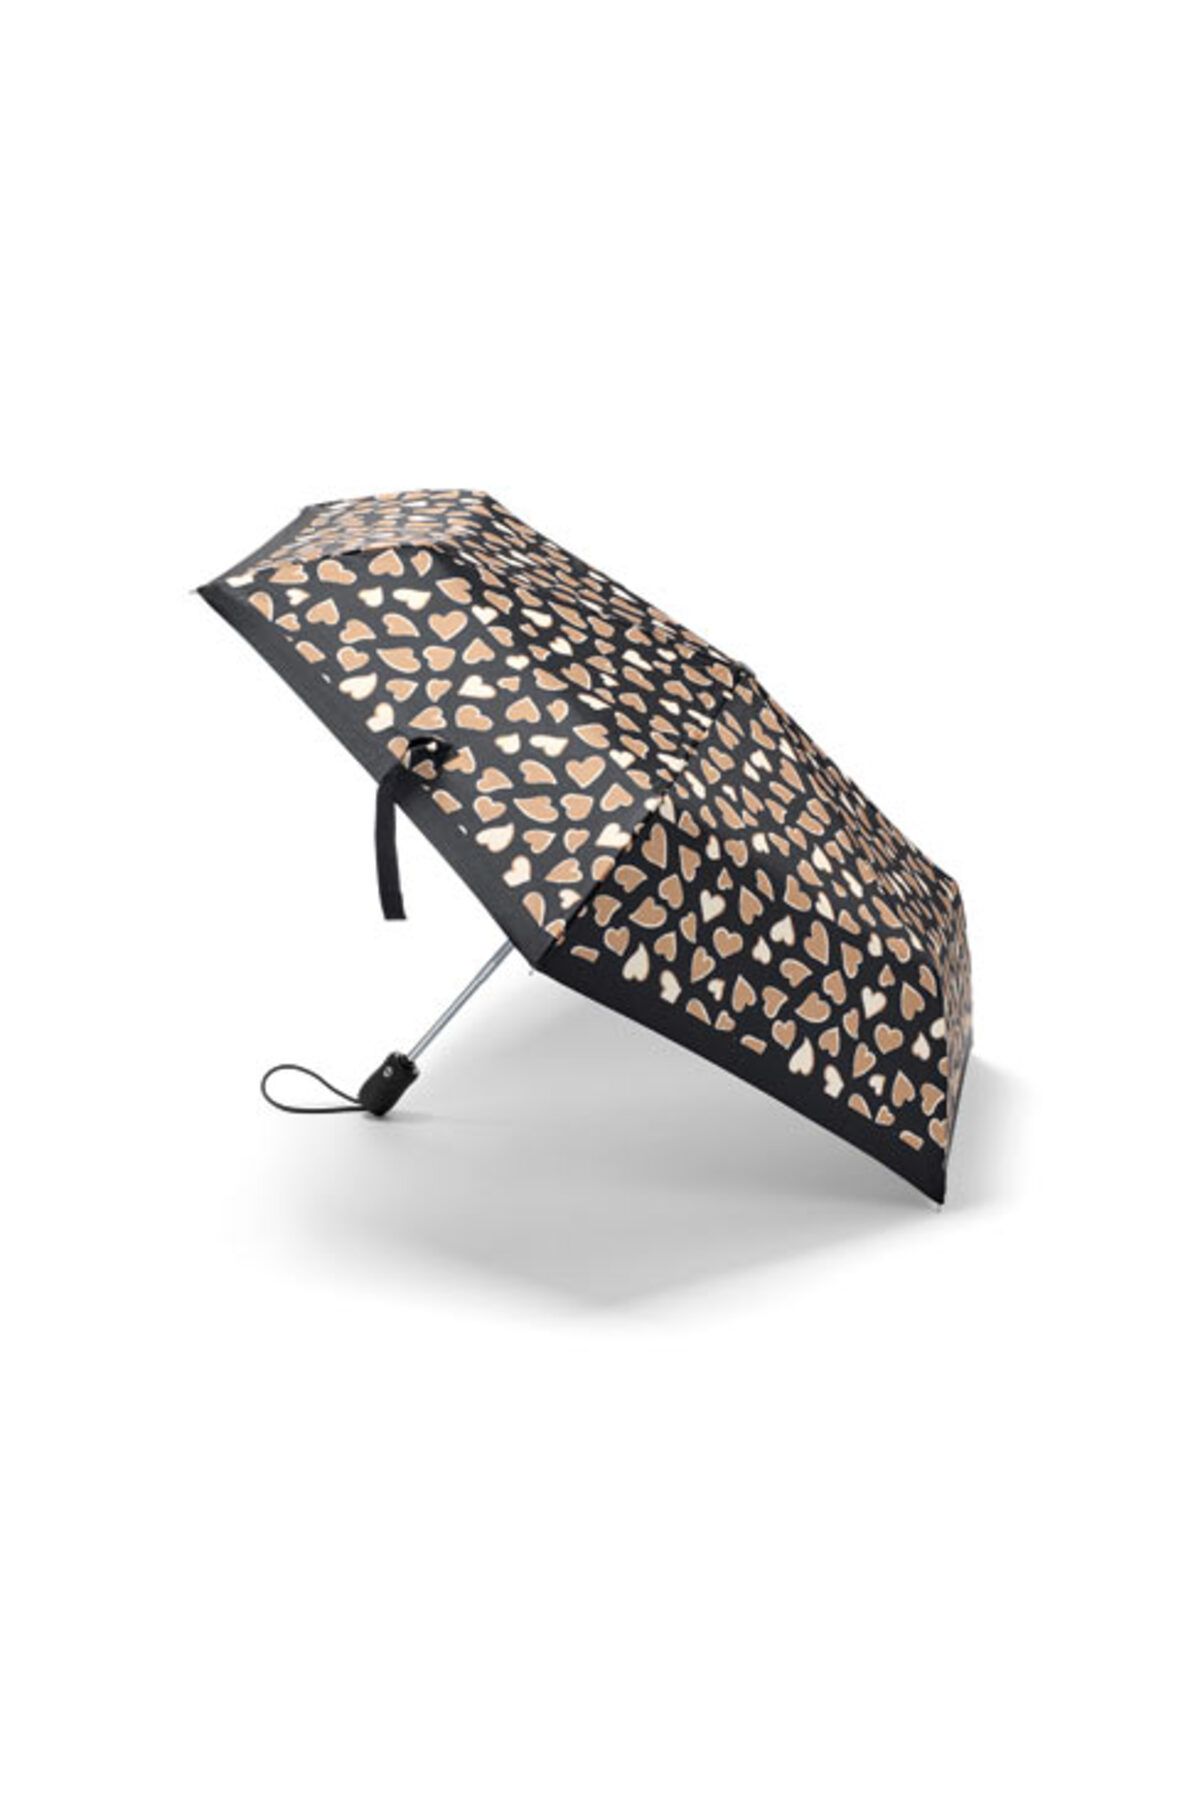 Tchibo Otomatik Cep Şemsiyesi